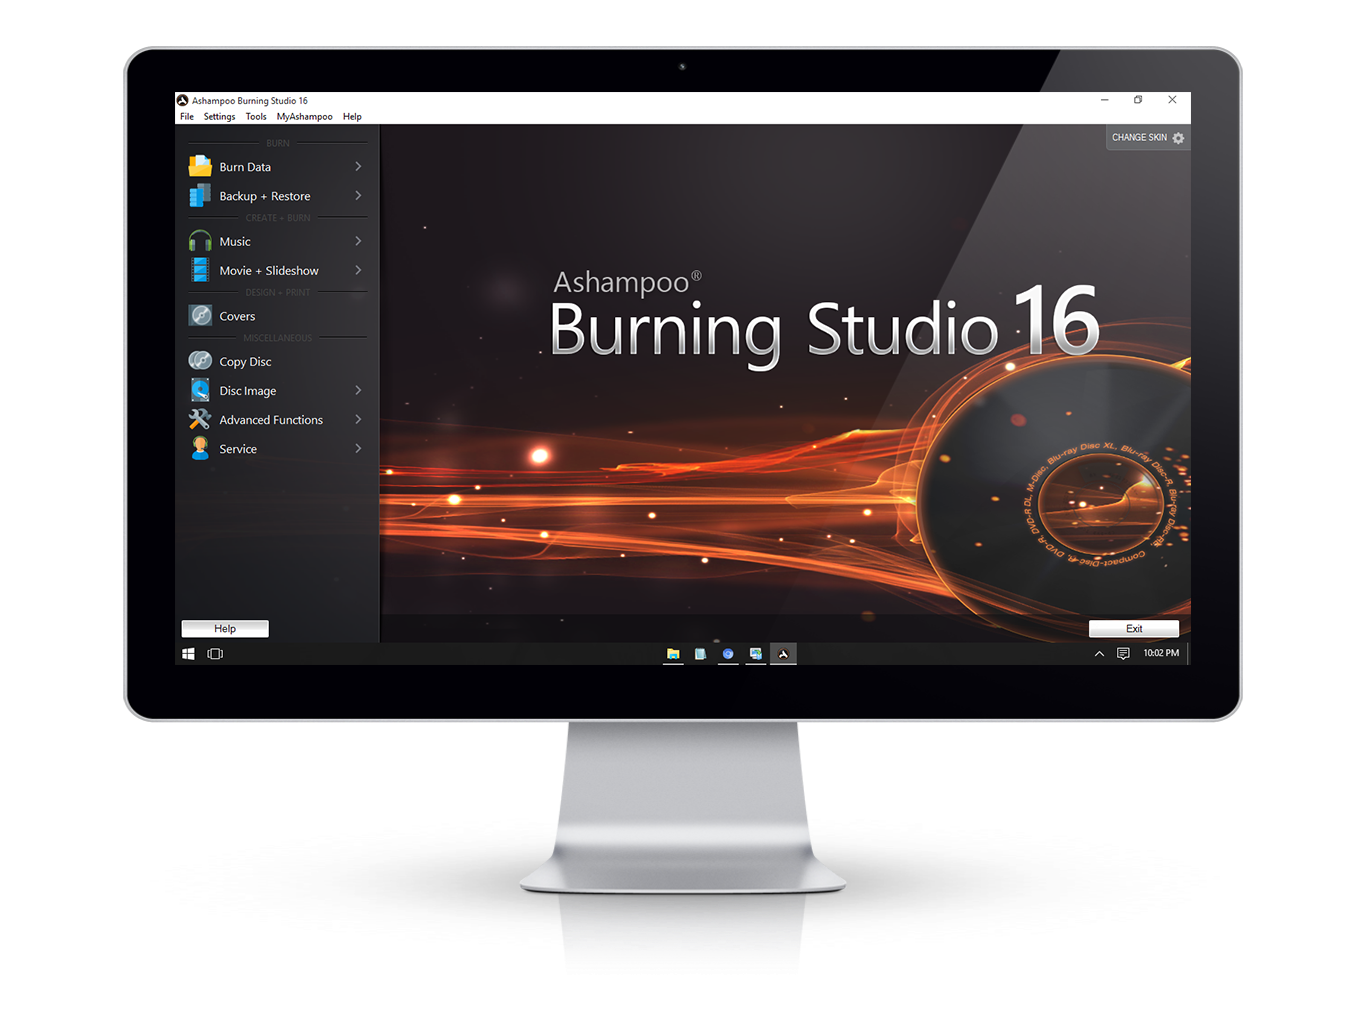 ashampoo burning studio free dvd copy software windows 7